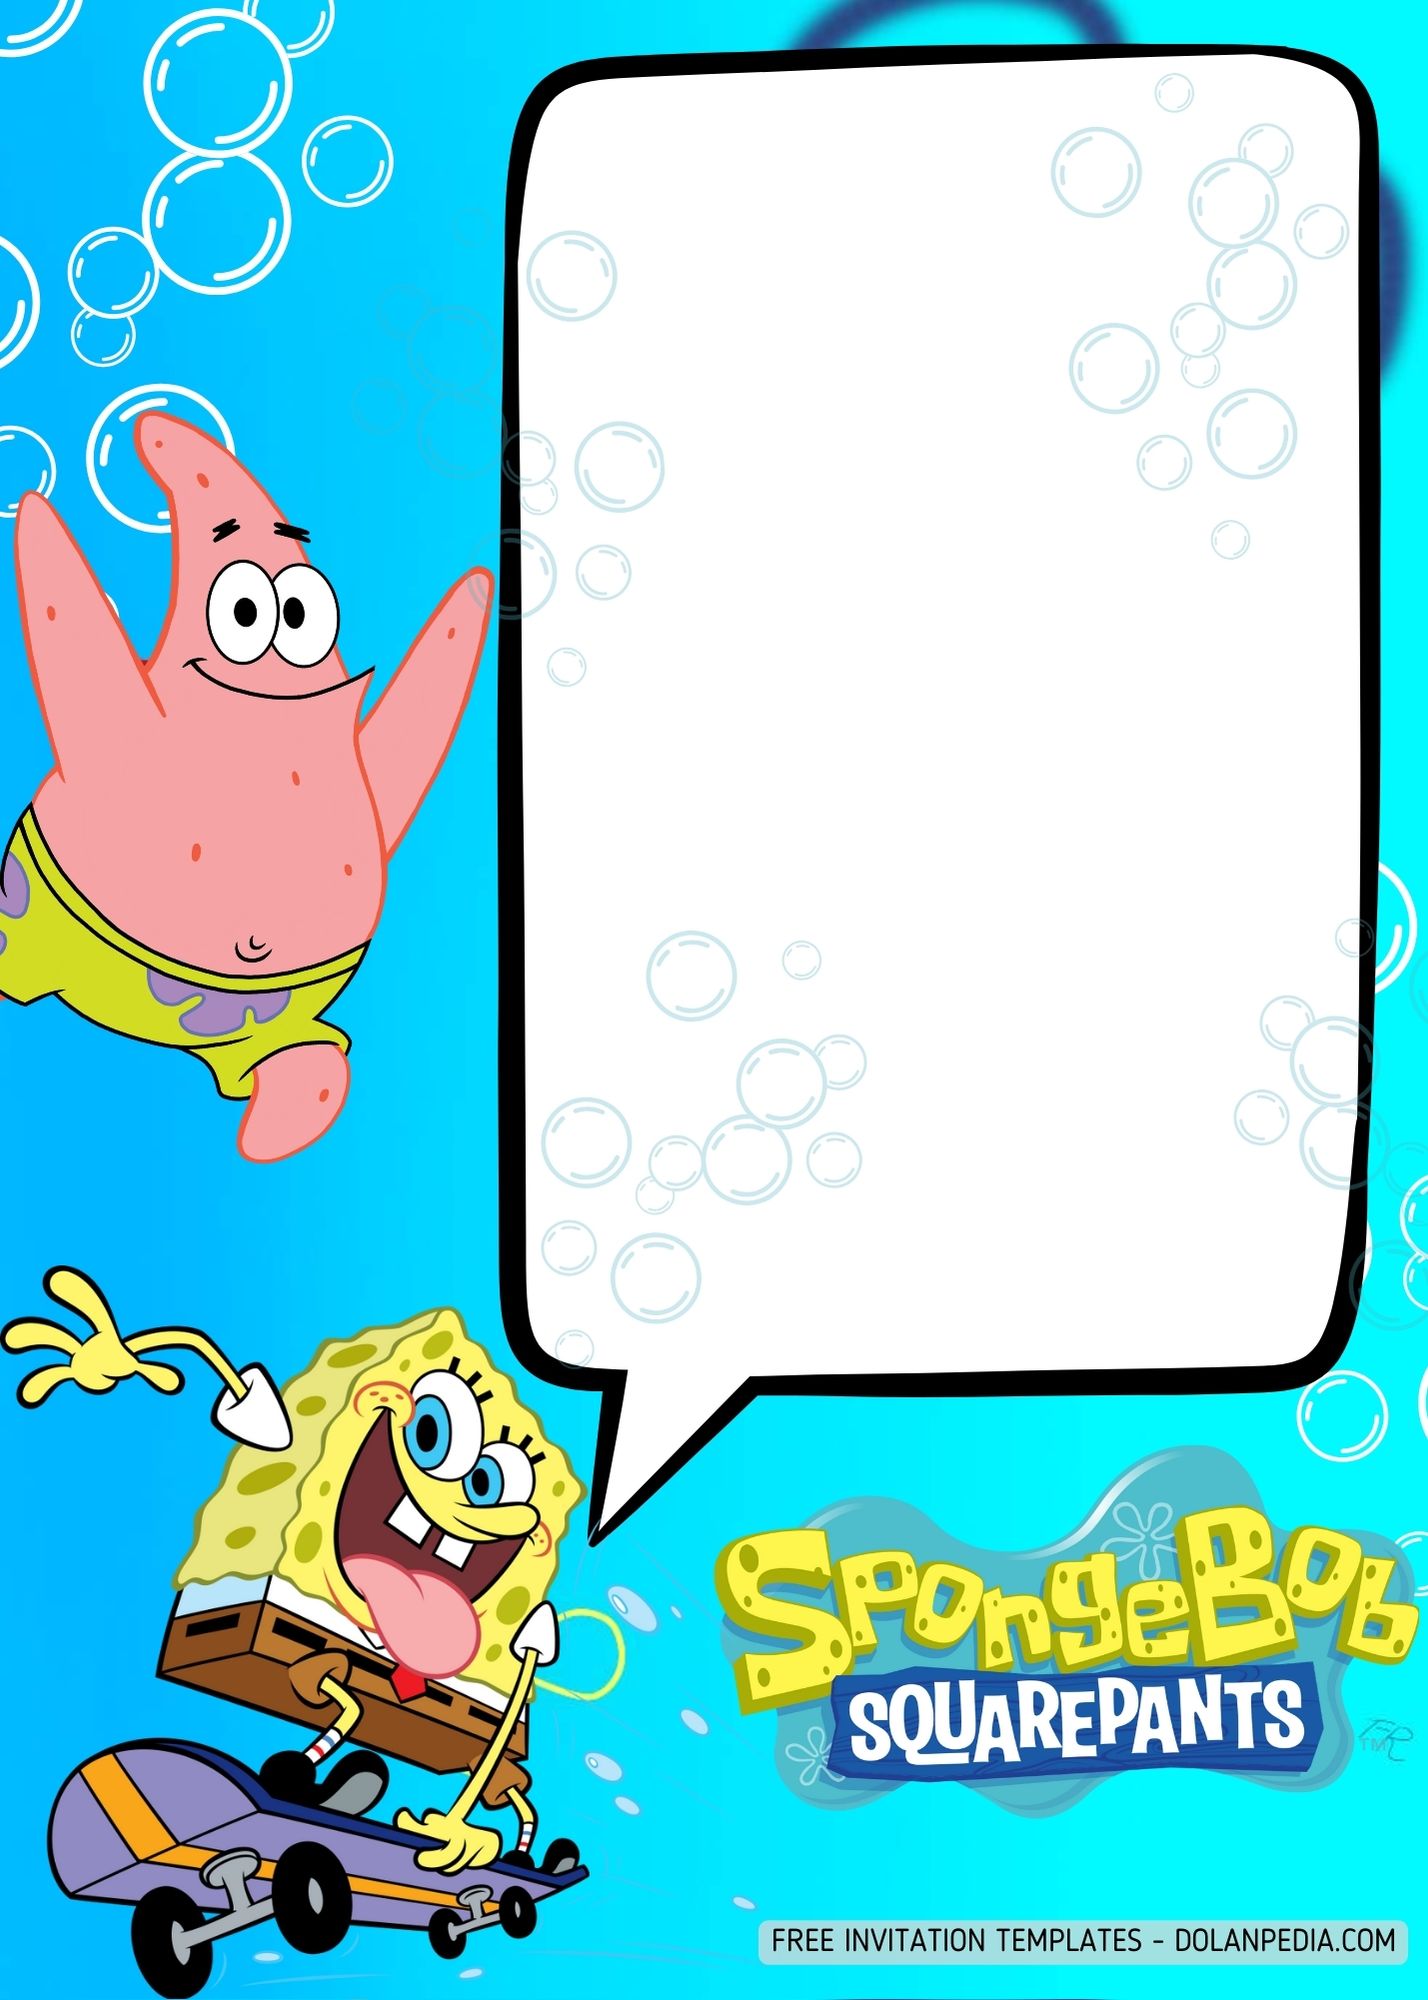 FREE Spongebob Squarepants Invitation Templates